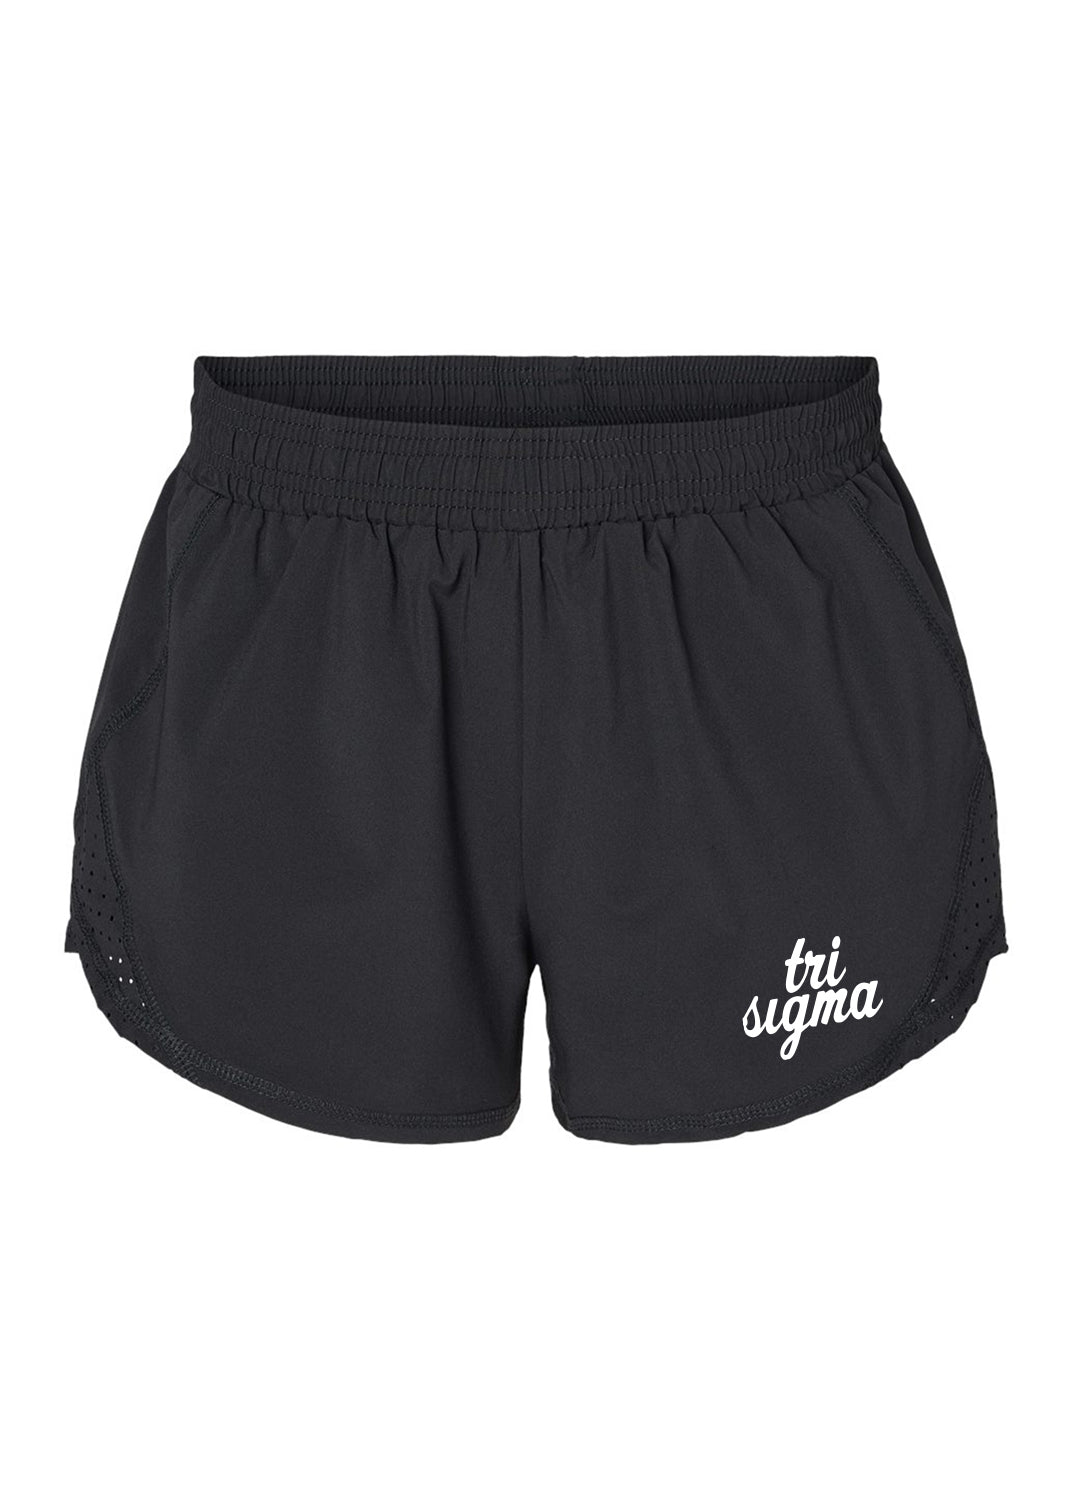 Tri Sigma Black Athletic Shorts